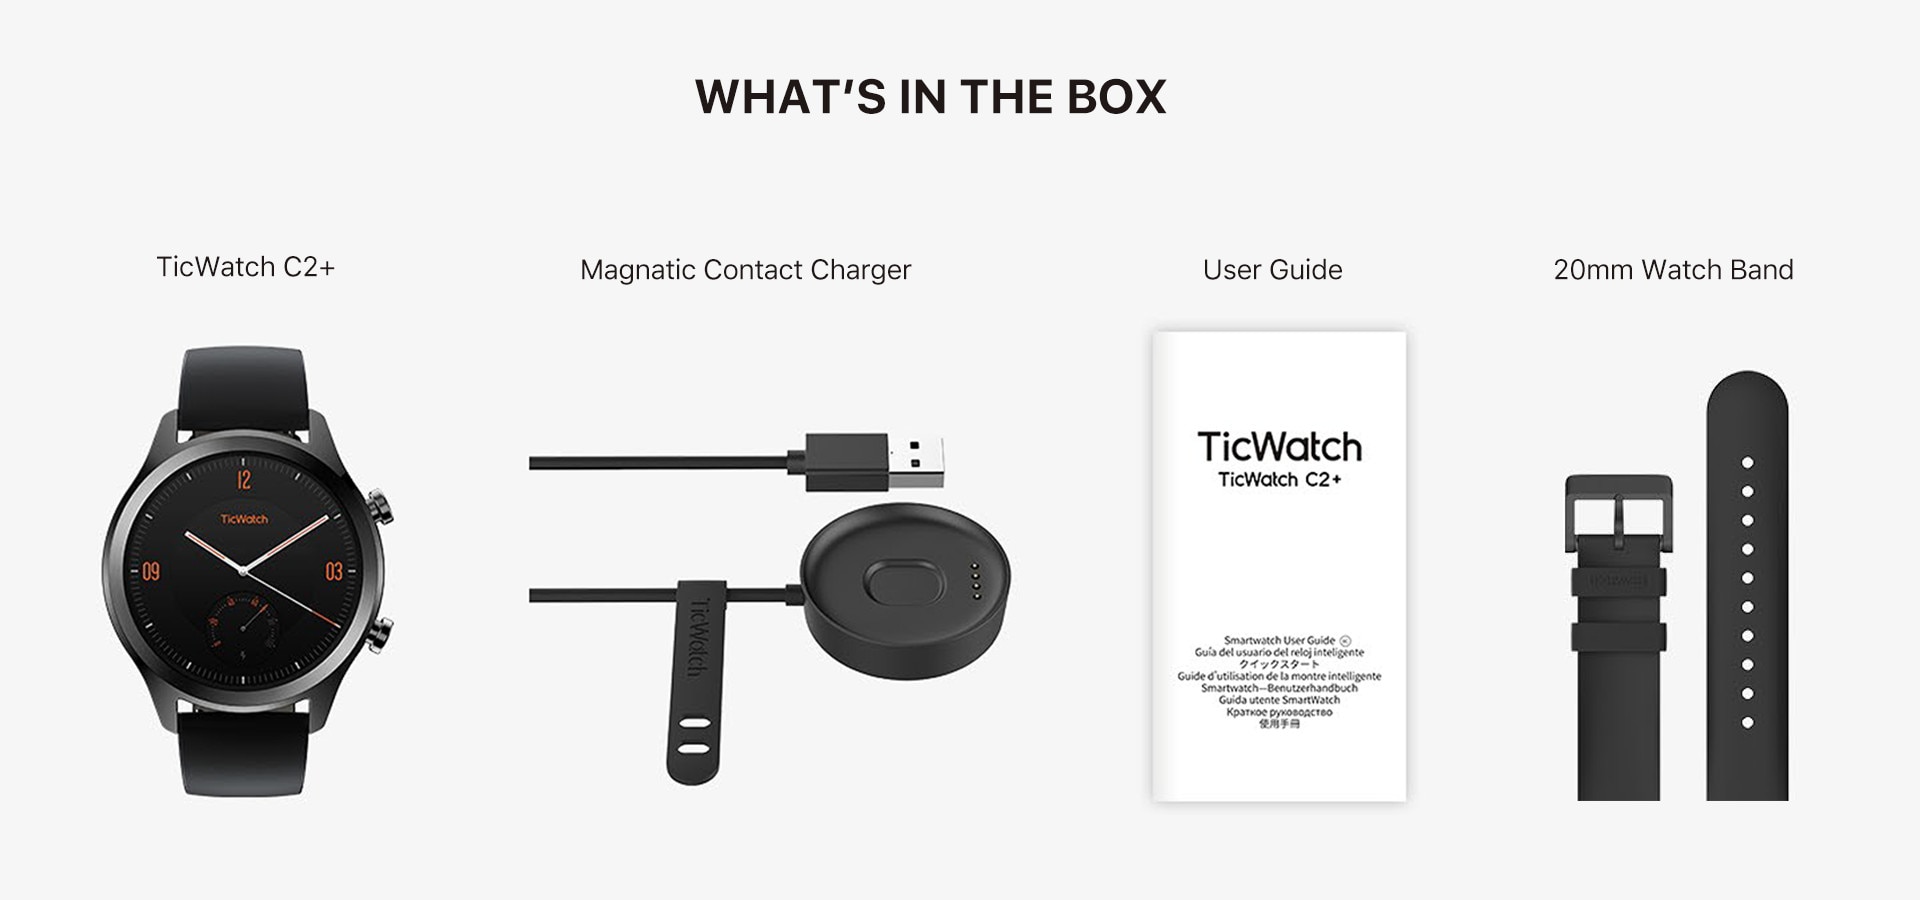 TicWatch C2 Plus Wear OS Smartwatch 1GB RAM Built-in GPS Fitness Tracking IP68 Waterproof Watch NFC Google Pay Women's Watch